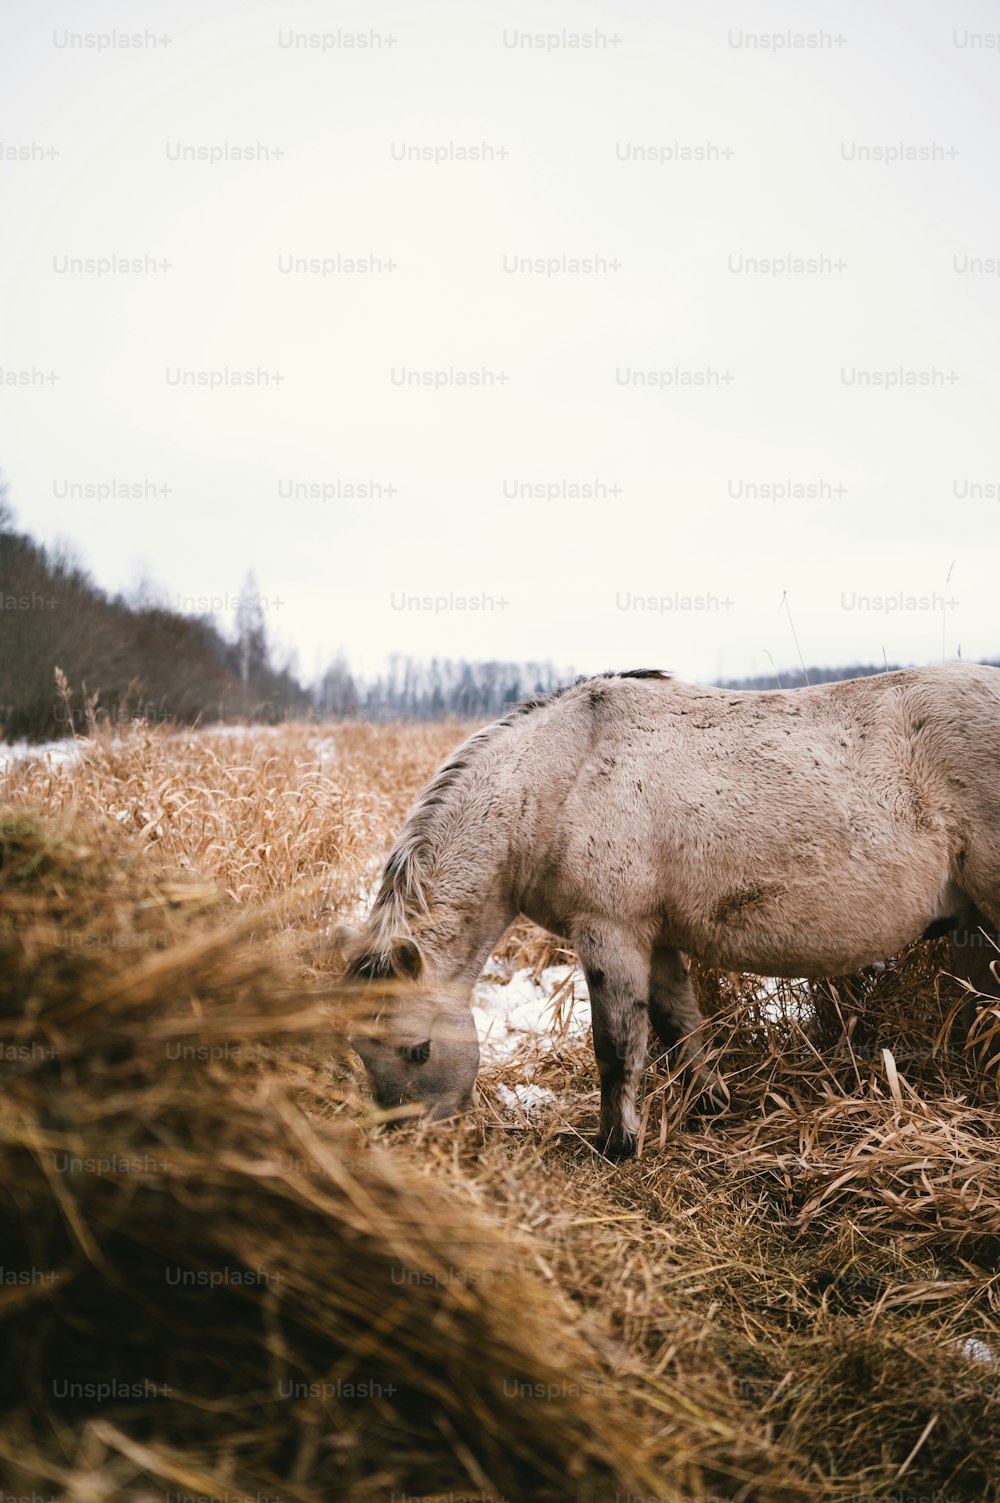 a donkey eating hay